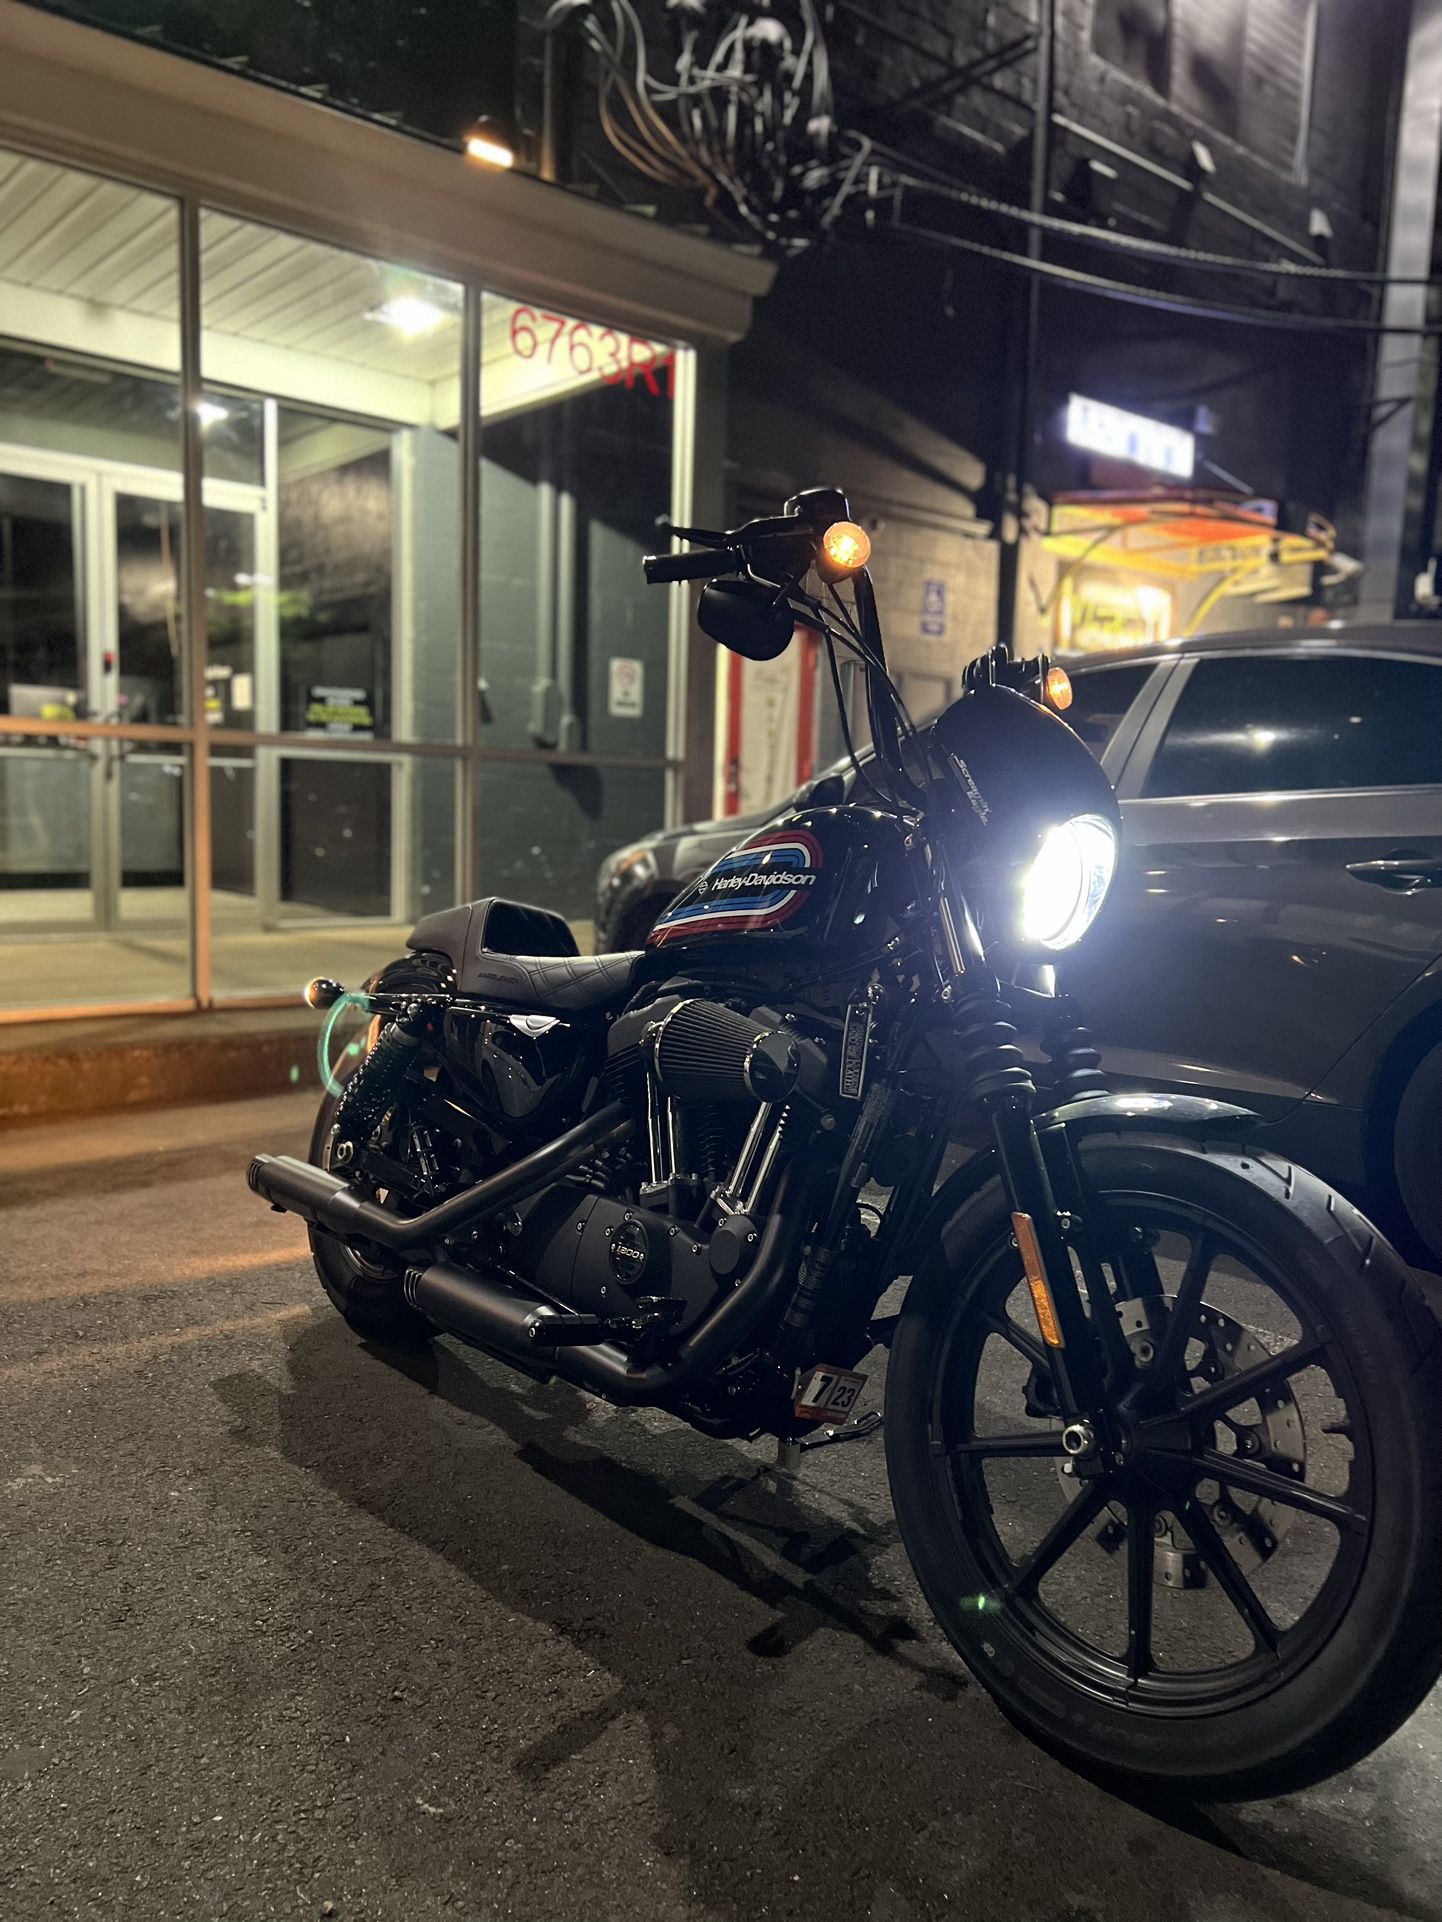 2020 Harley Davidson Sportster iron 1200